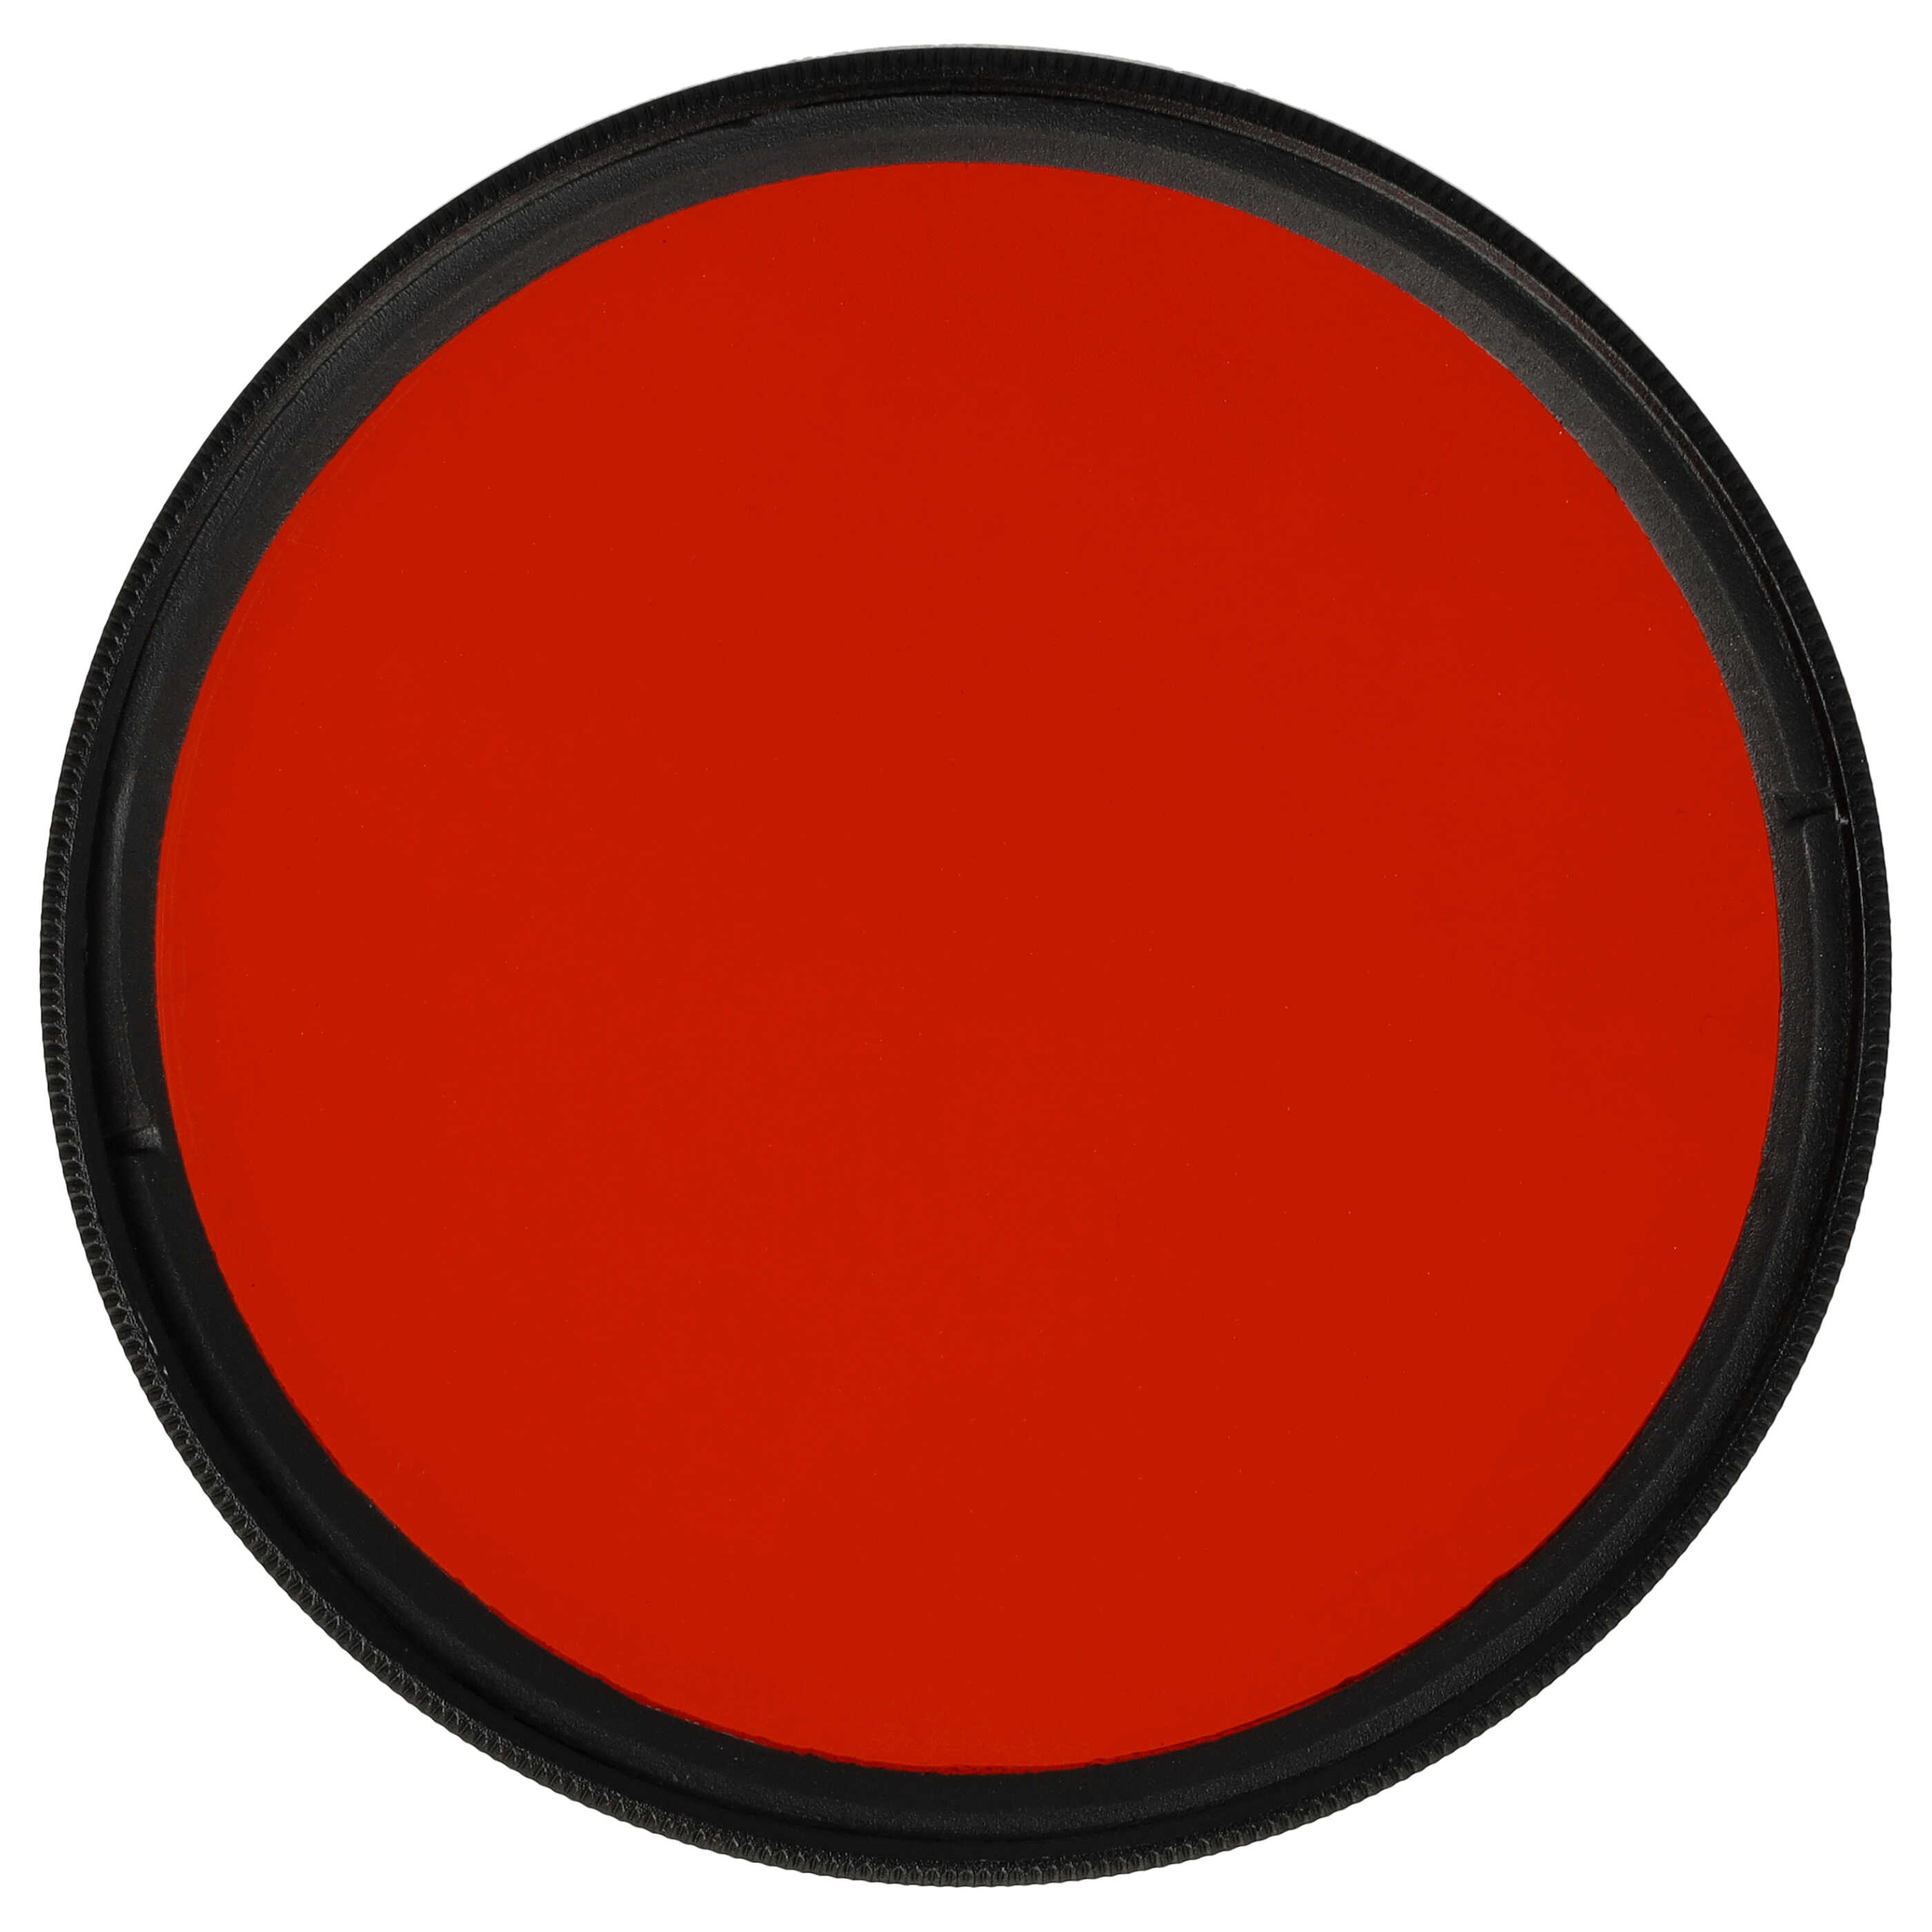 Coloured Filter, Orange suitable for Camera Lenses with 62 mm Filter Thread - Orange Filter